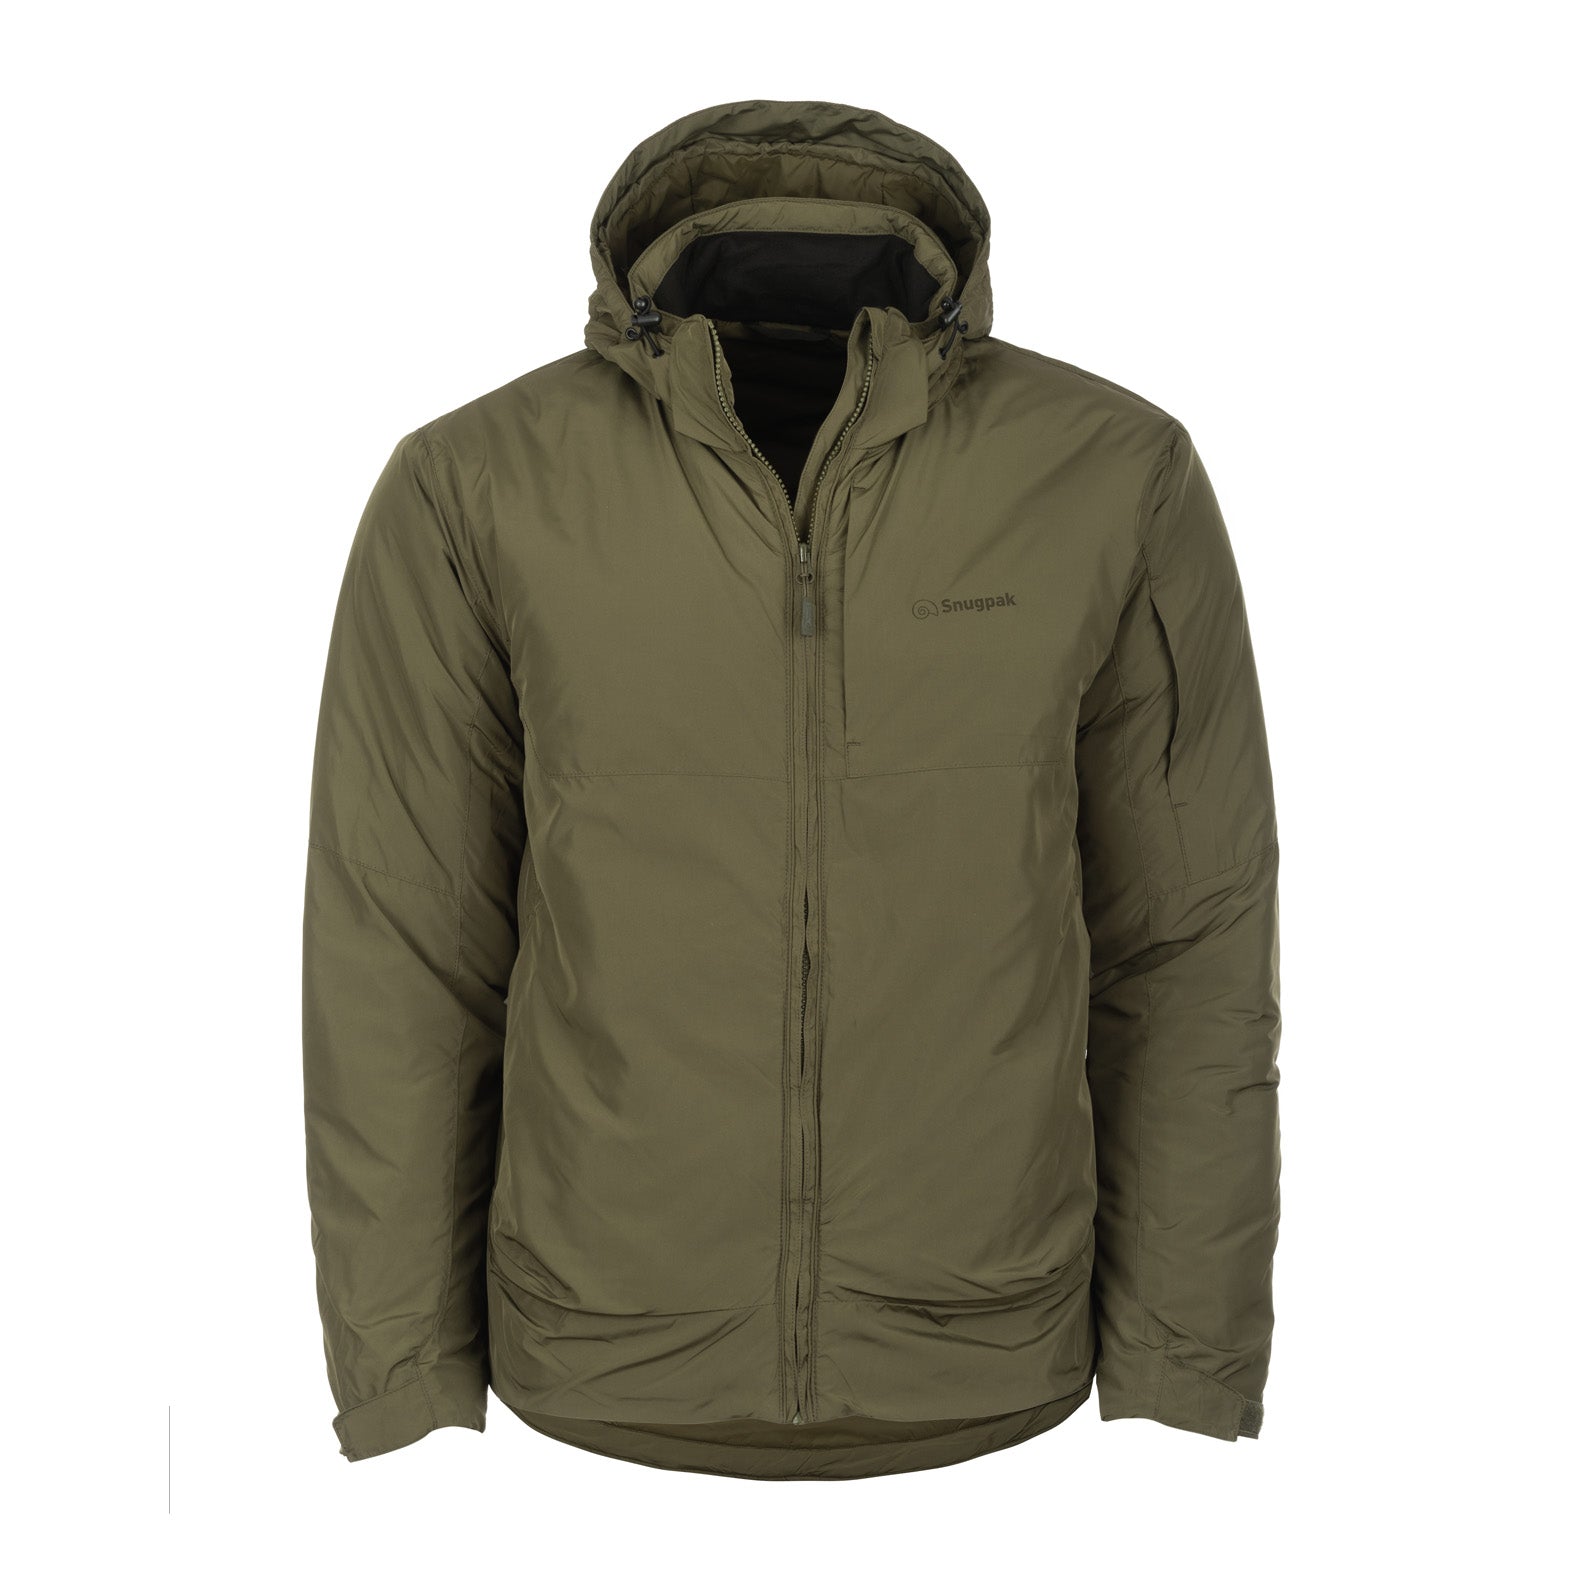 Snugpak Arrowhead Technical Insulated Jacket